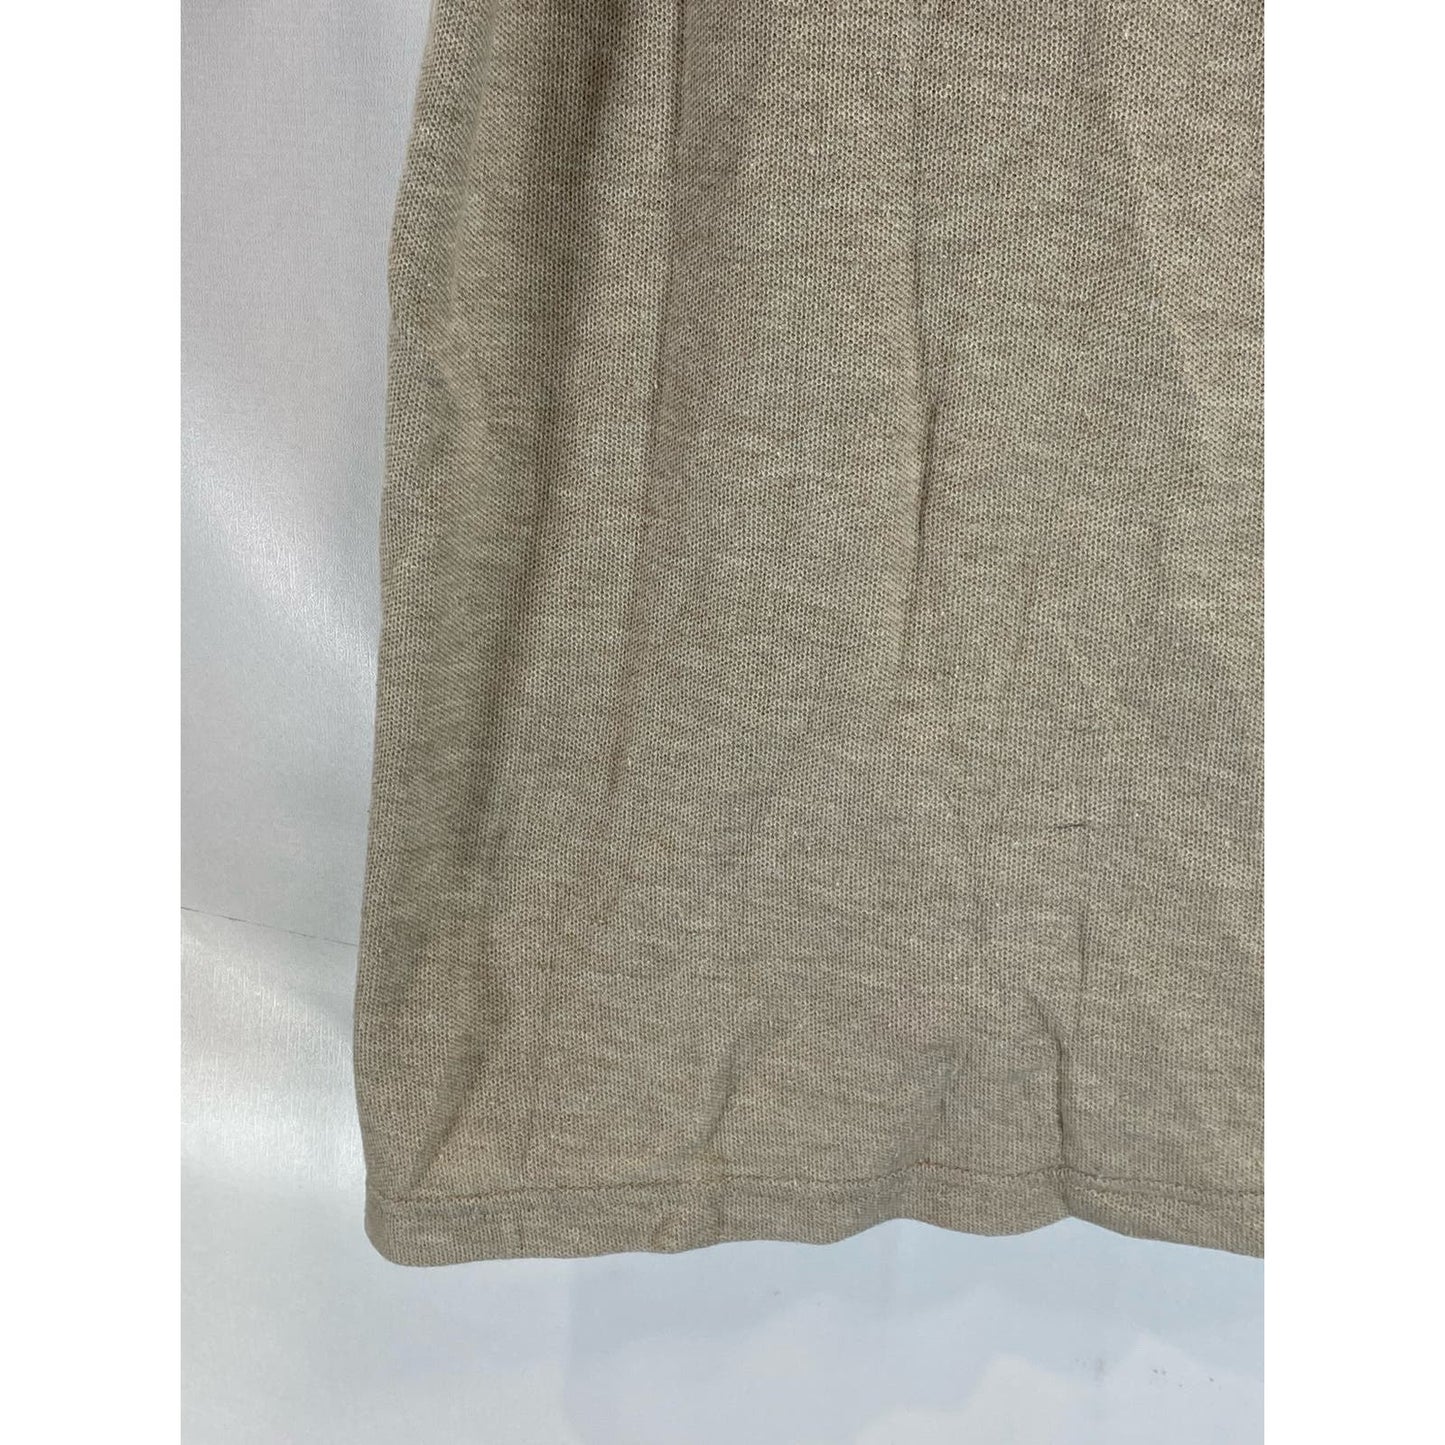 BANANA REPUBLIC Men's Sand Cotton Short Sleeve Polo Shirt SZ L